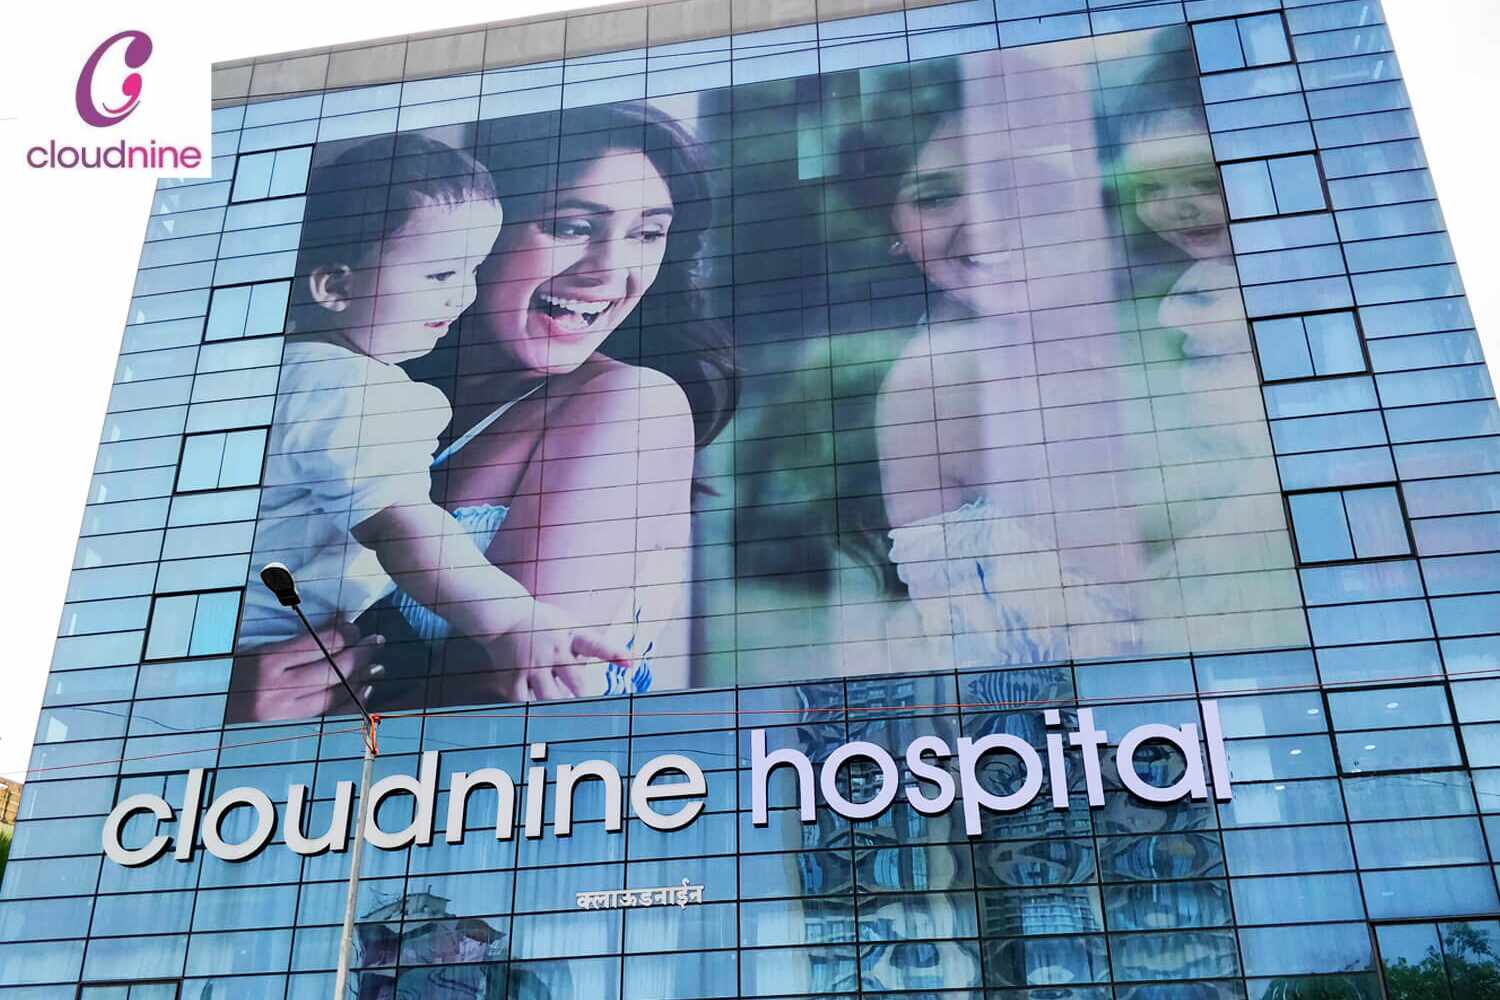 Cloudnine Hospital Mumbai